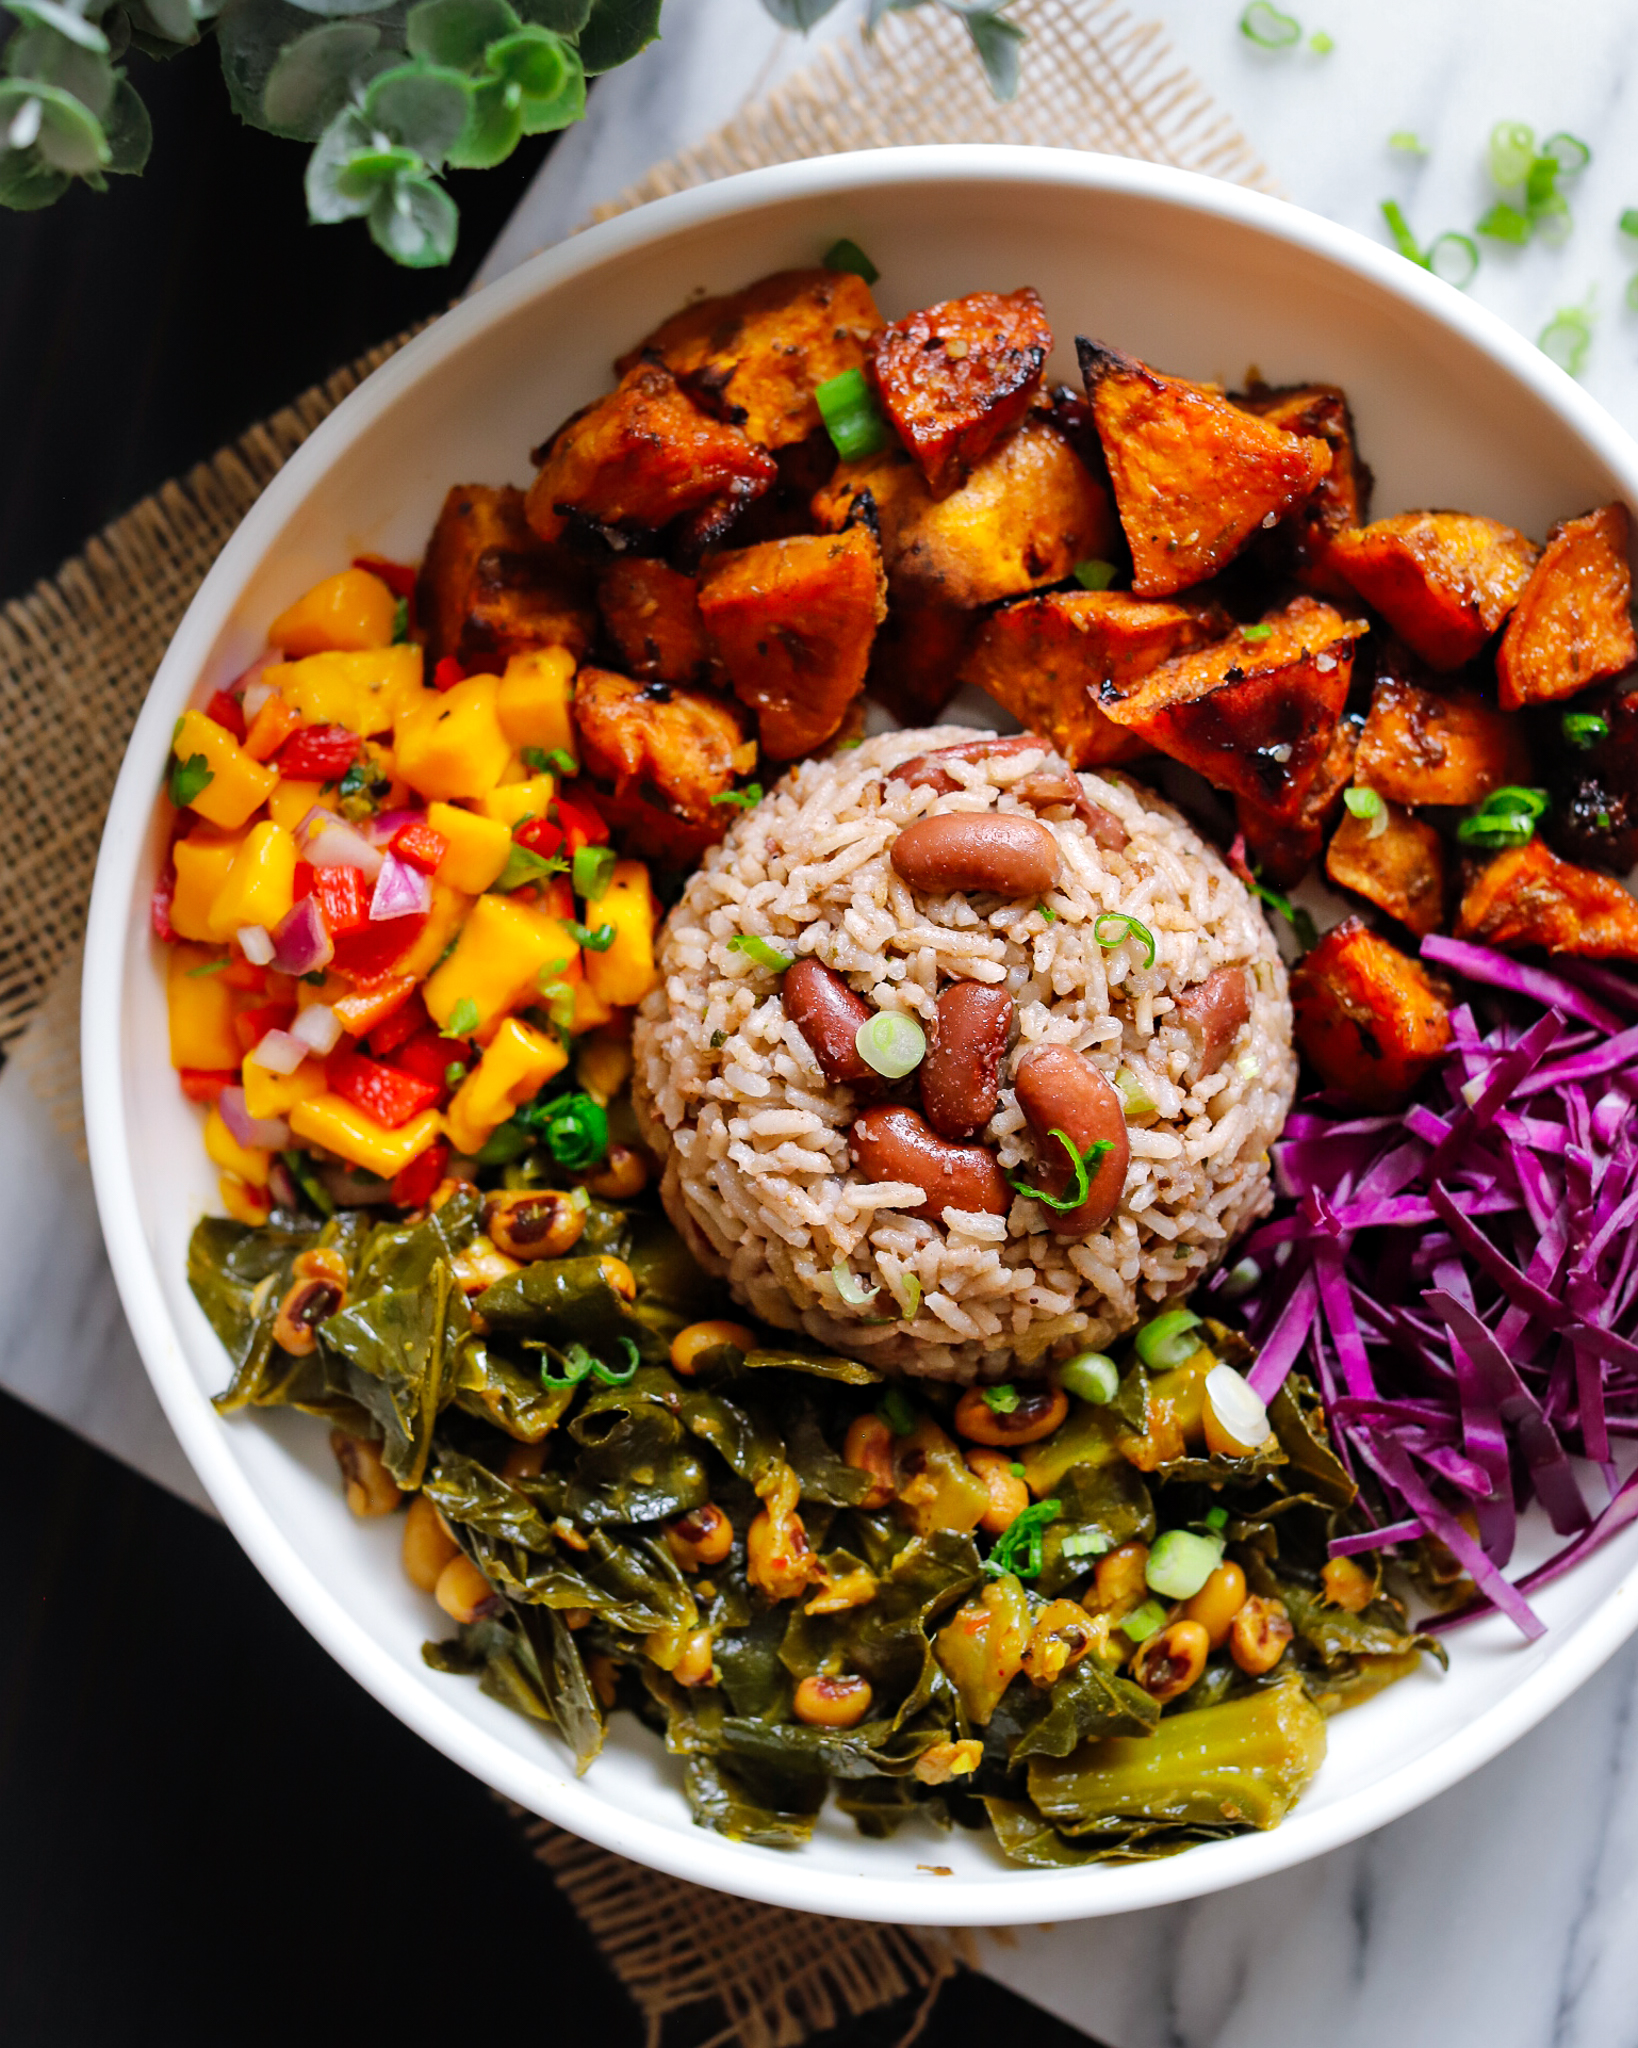 Caribbean-Inspired Vegan Bento Box Meal Prep + VIDEO + VIDEO